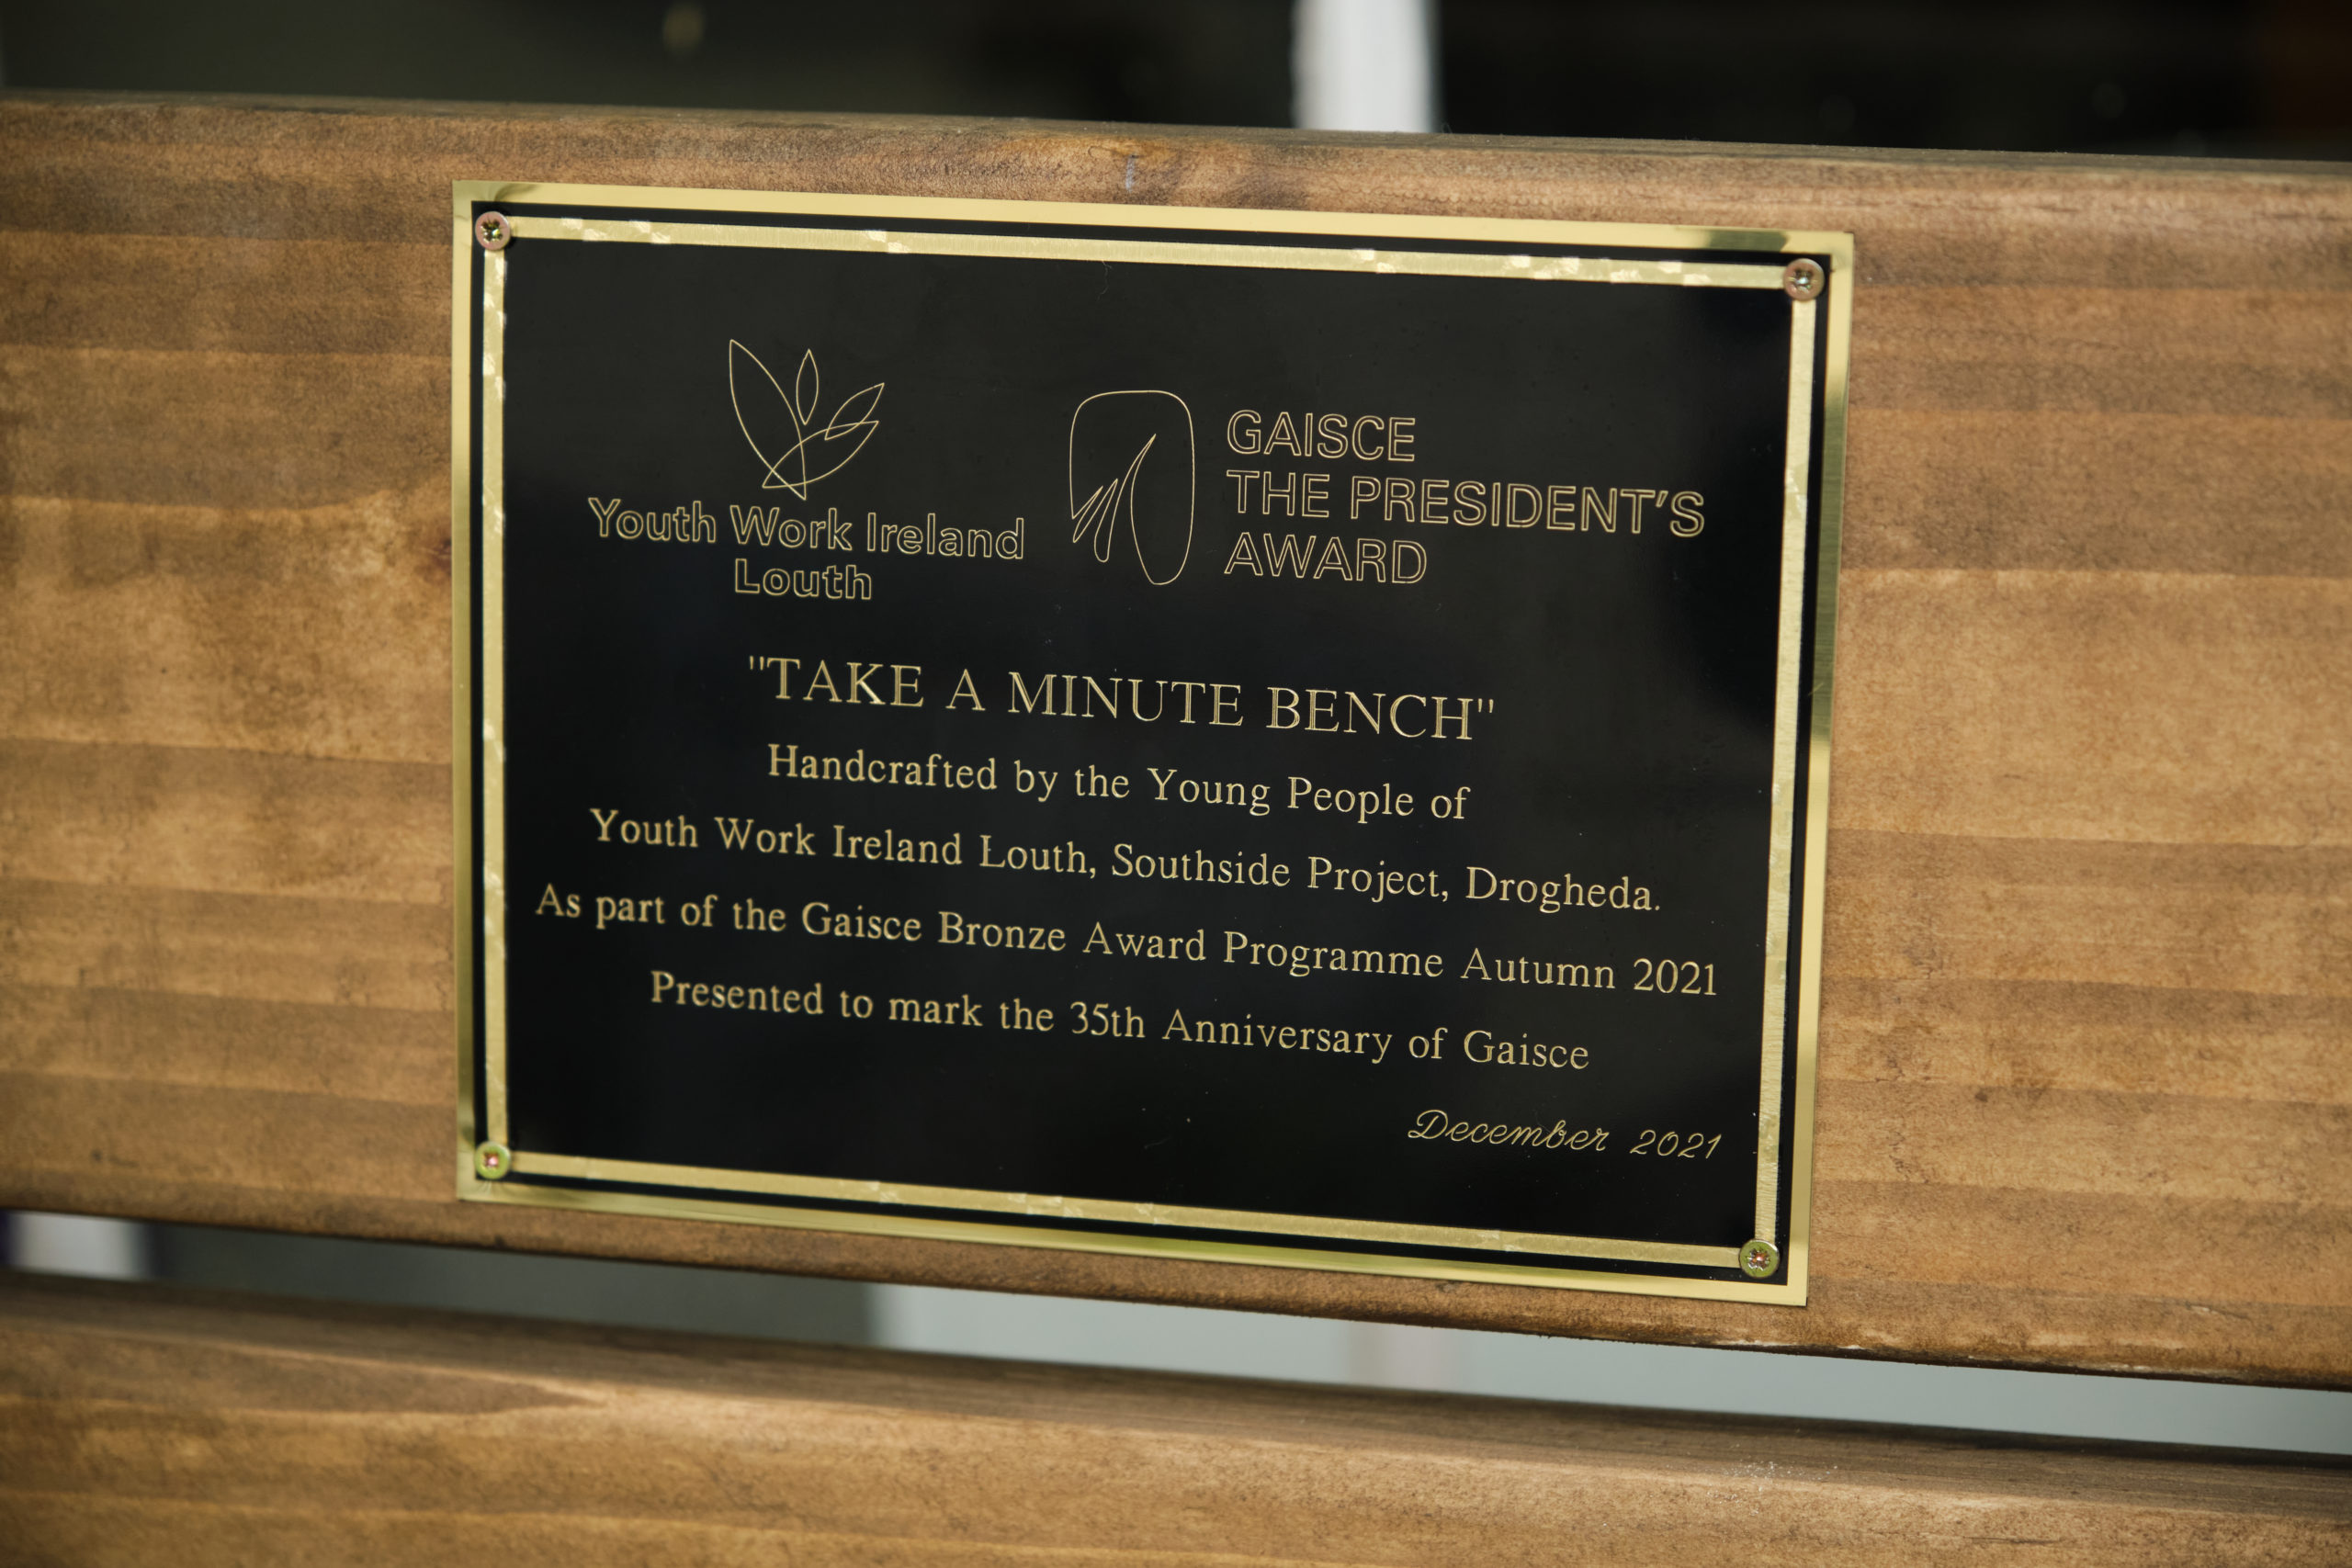 La panchina Just a Minute è stata creata dai partecipanti di Youth Work Ireland Louth